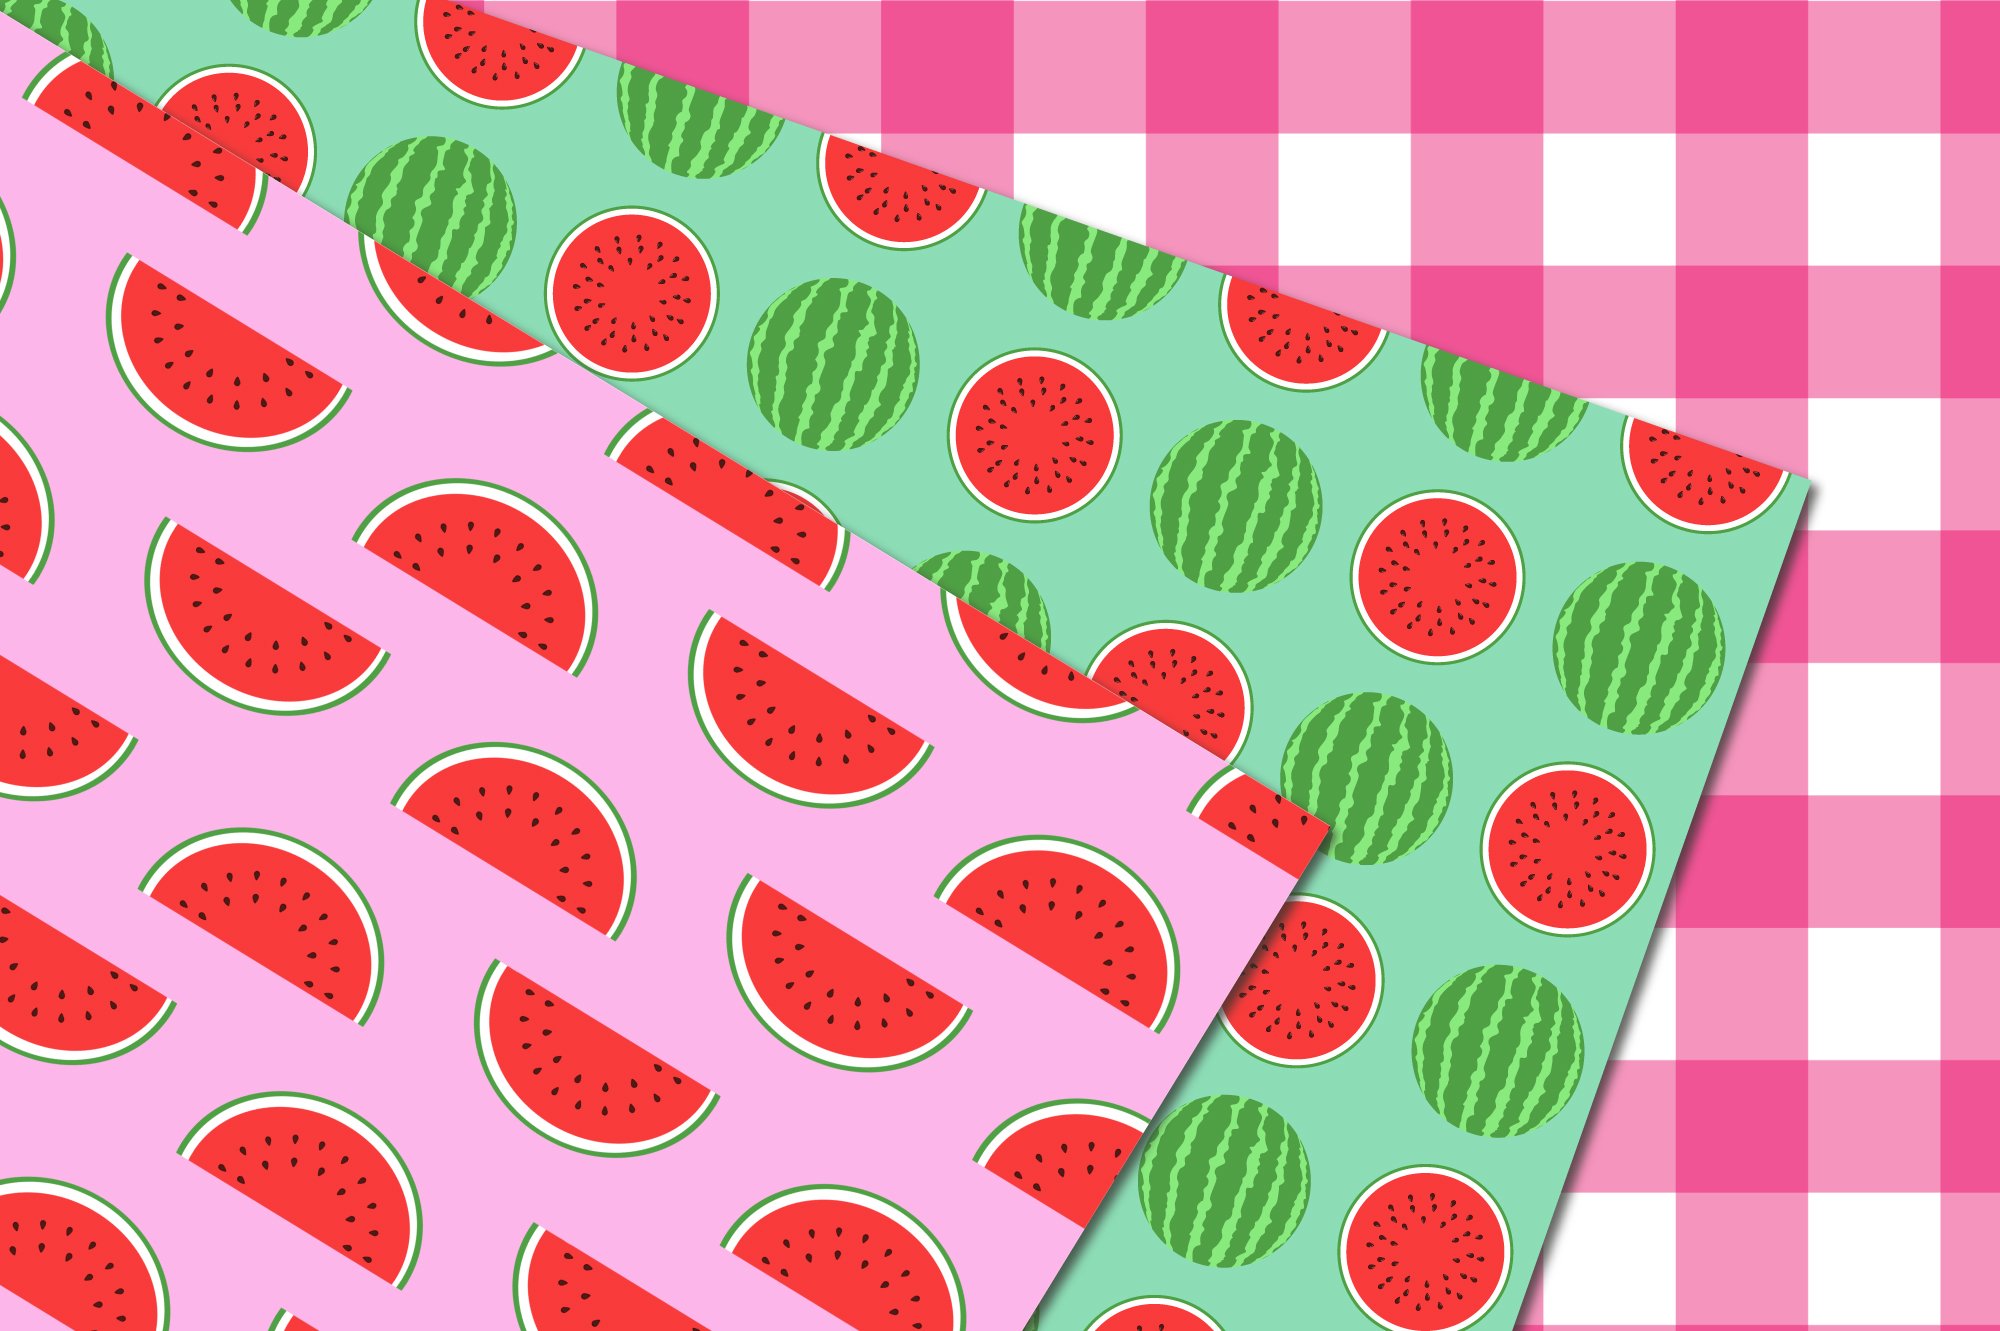 pfd watermelon paper samples 582